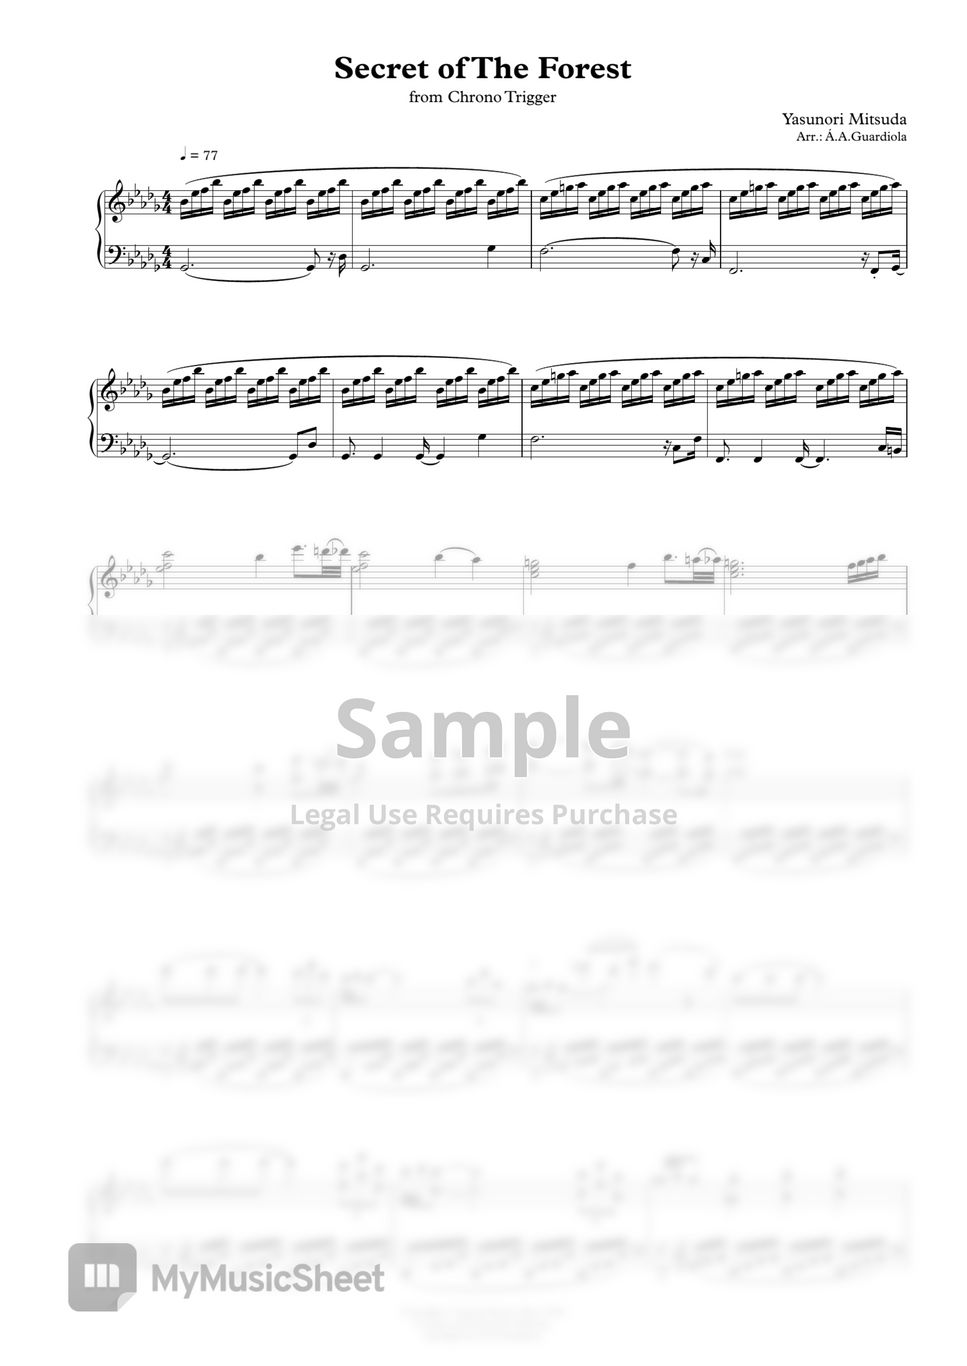 Yasunori Mitsuda - Secret of the Forest piano reduction (intermediate) by Á.A.Guardiola